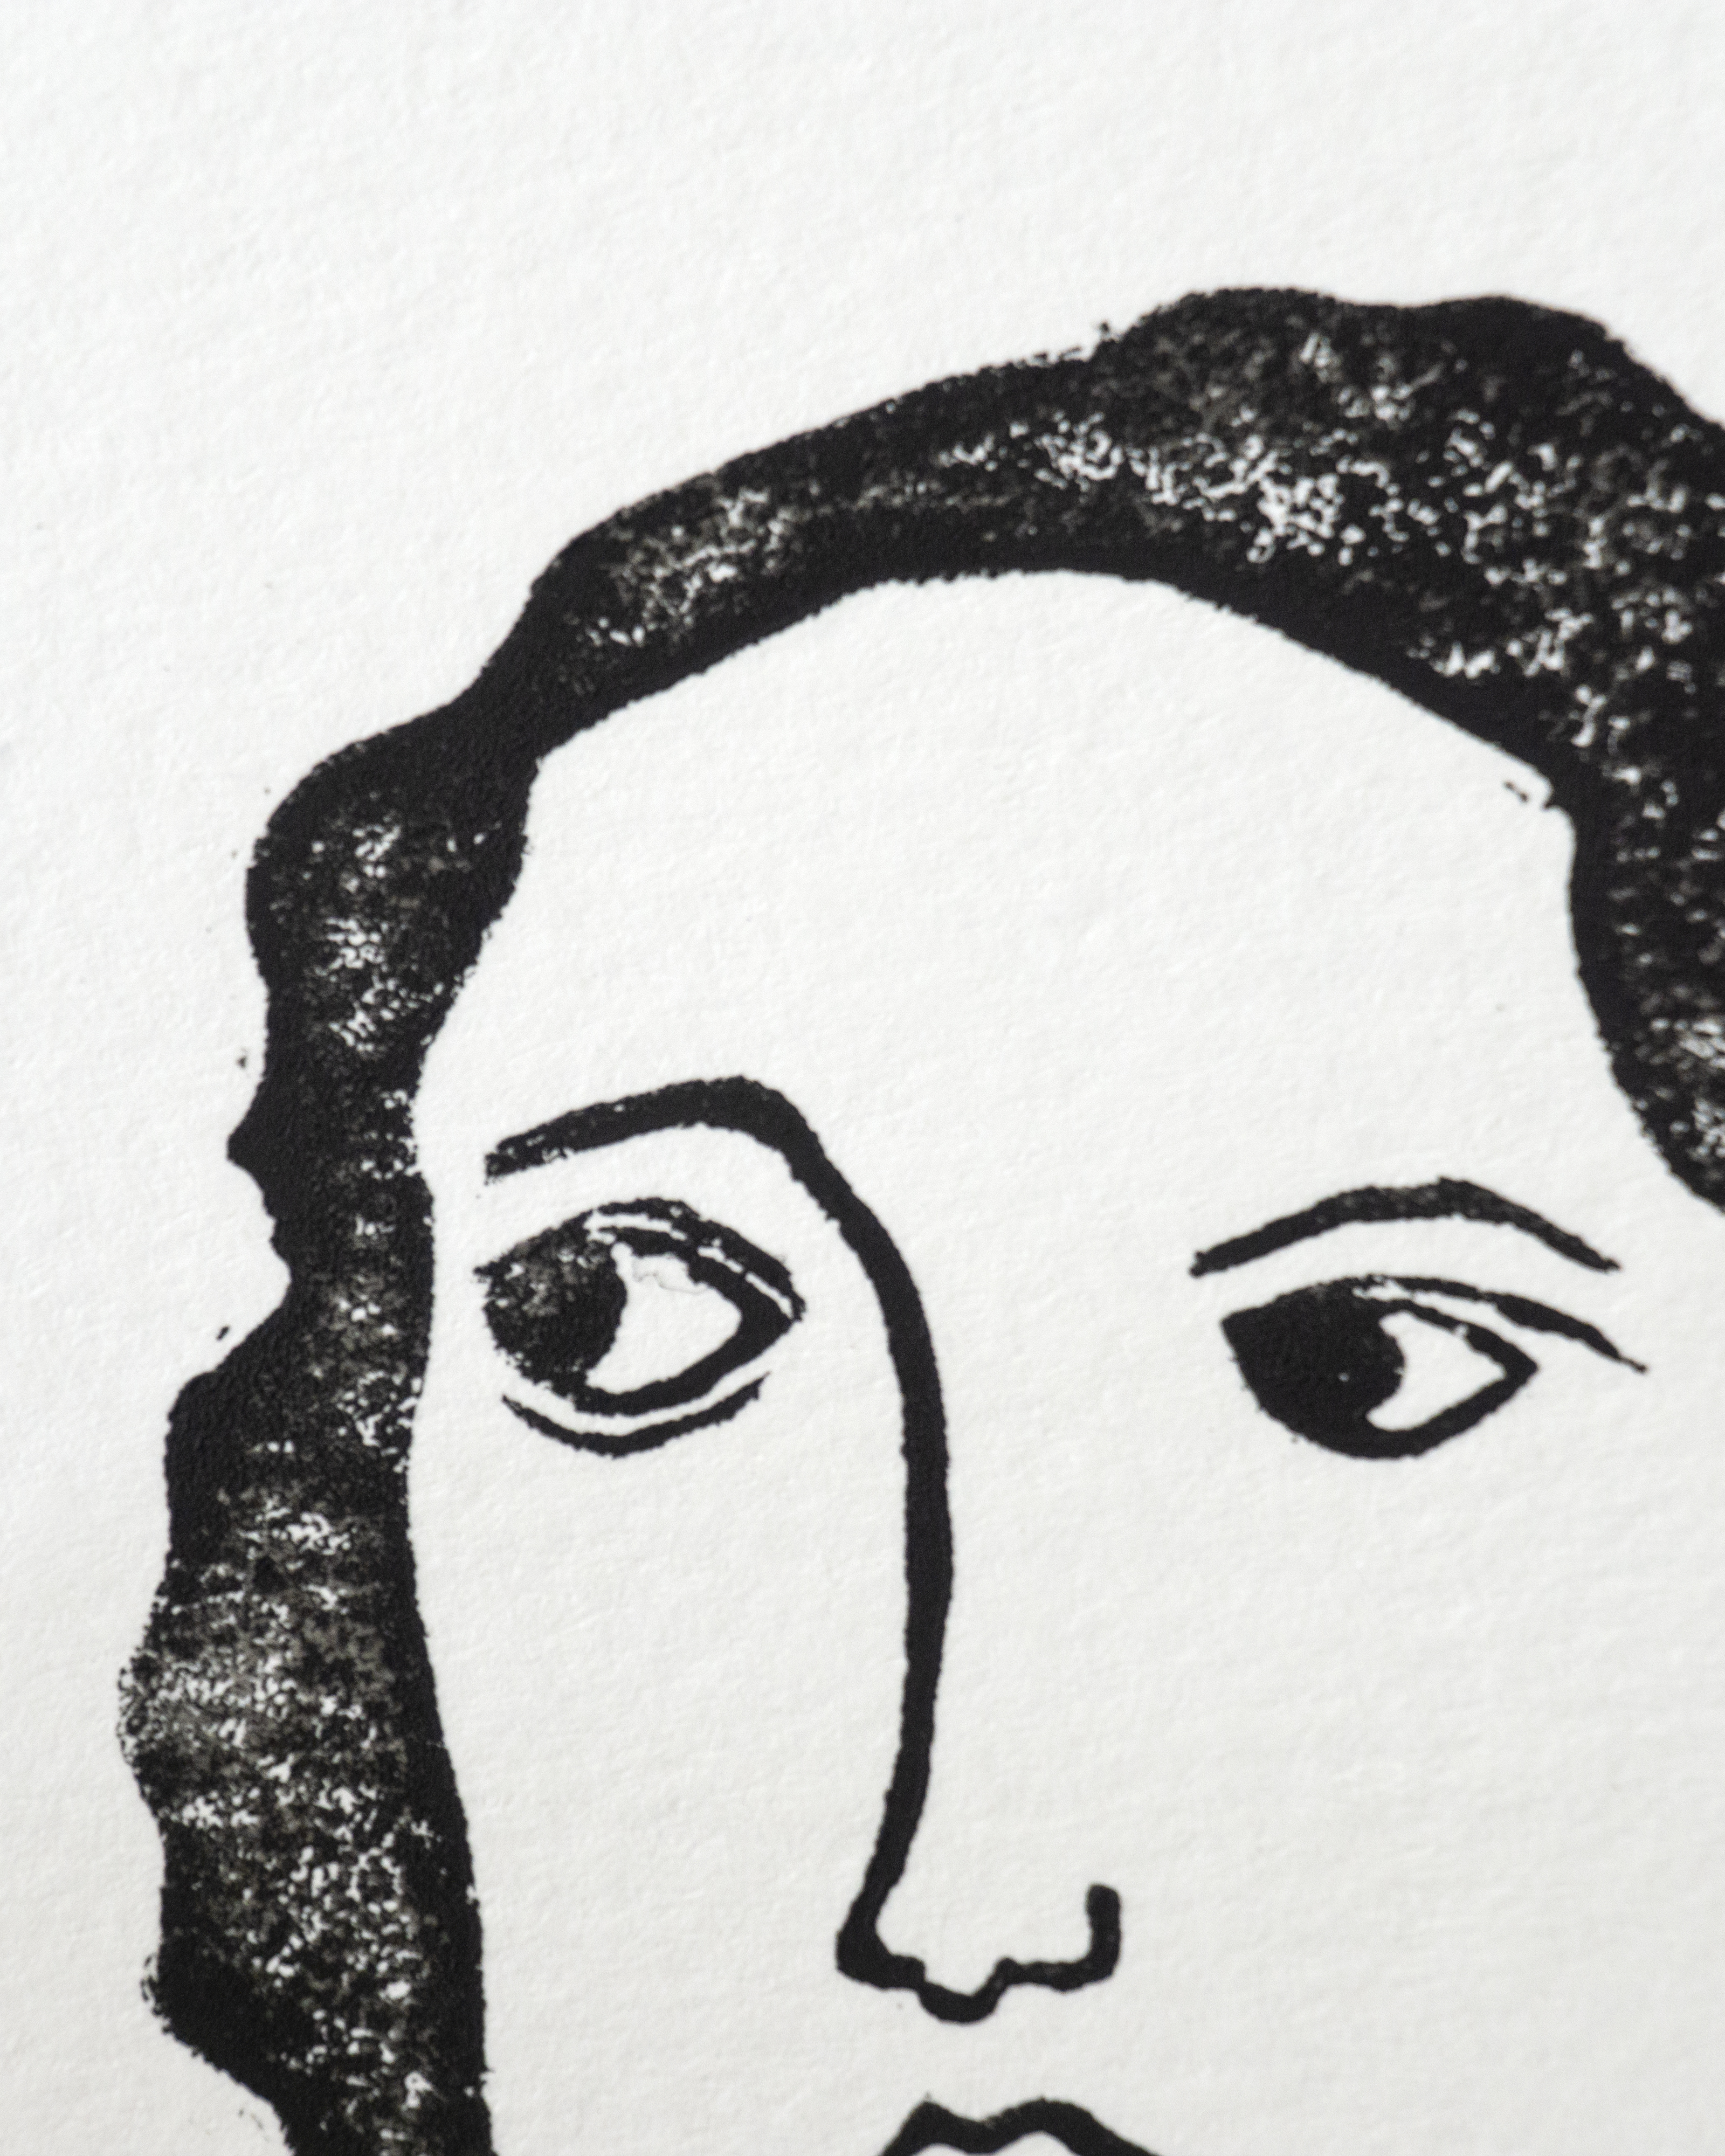 A closeup of a linocut print of a woman's face